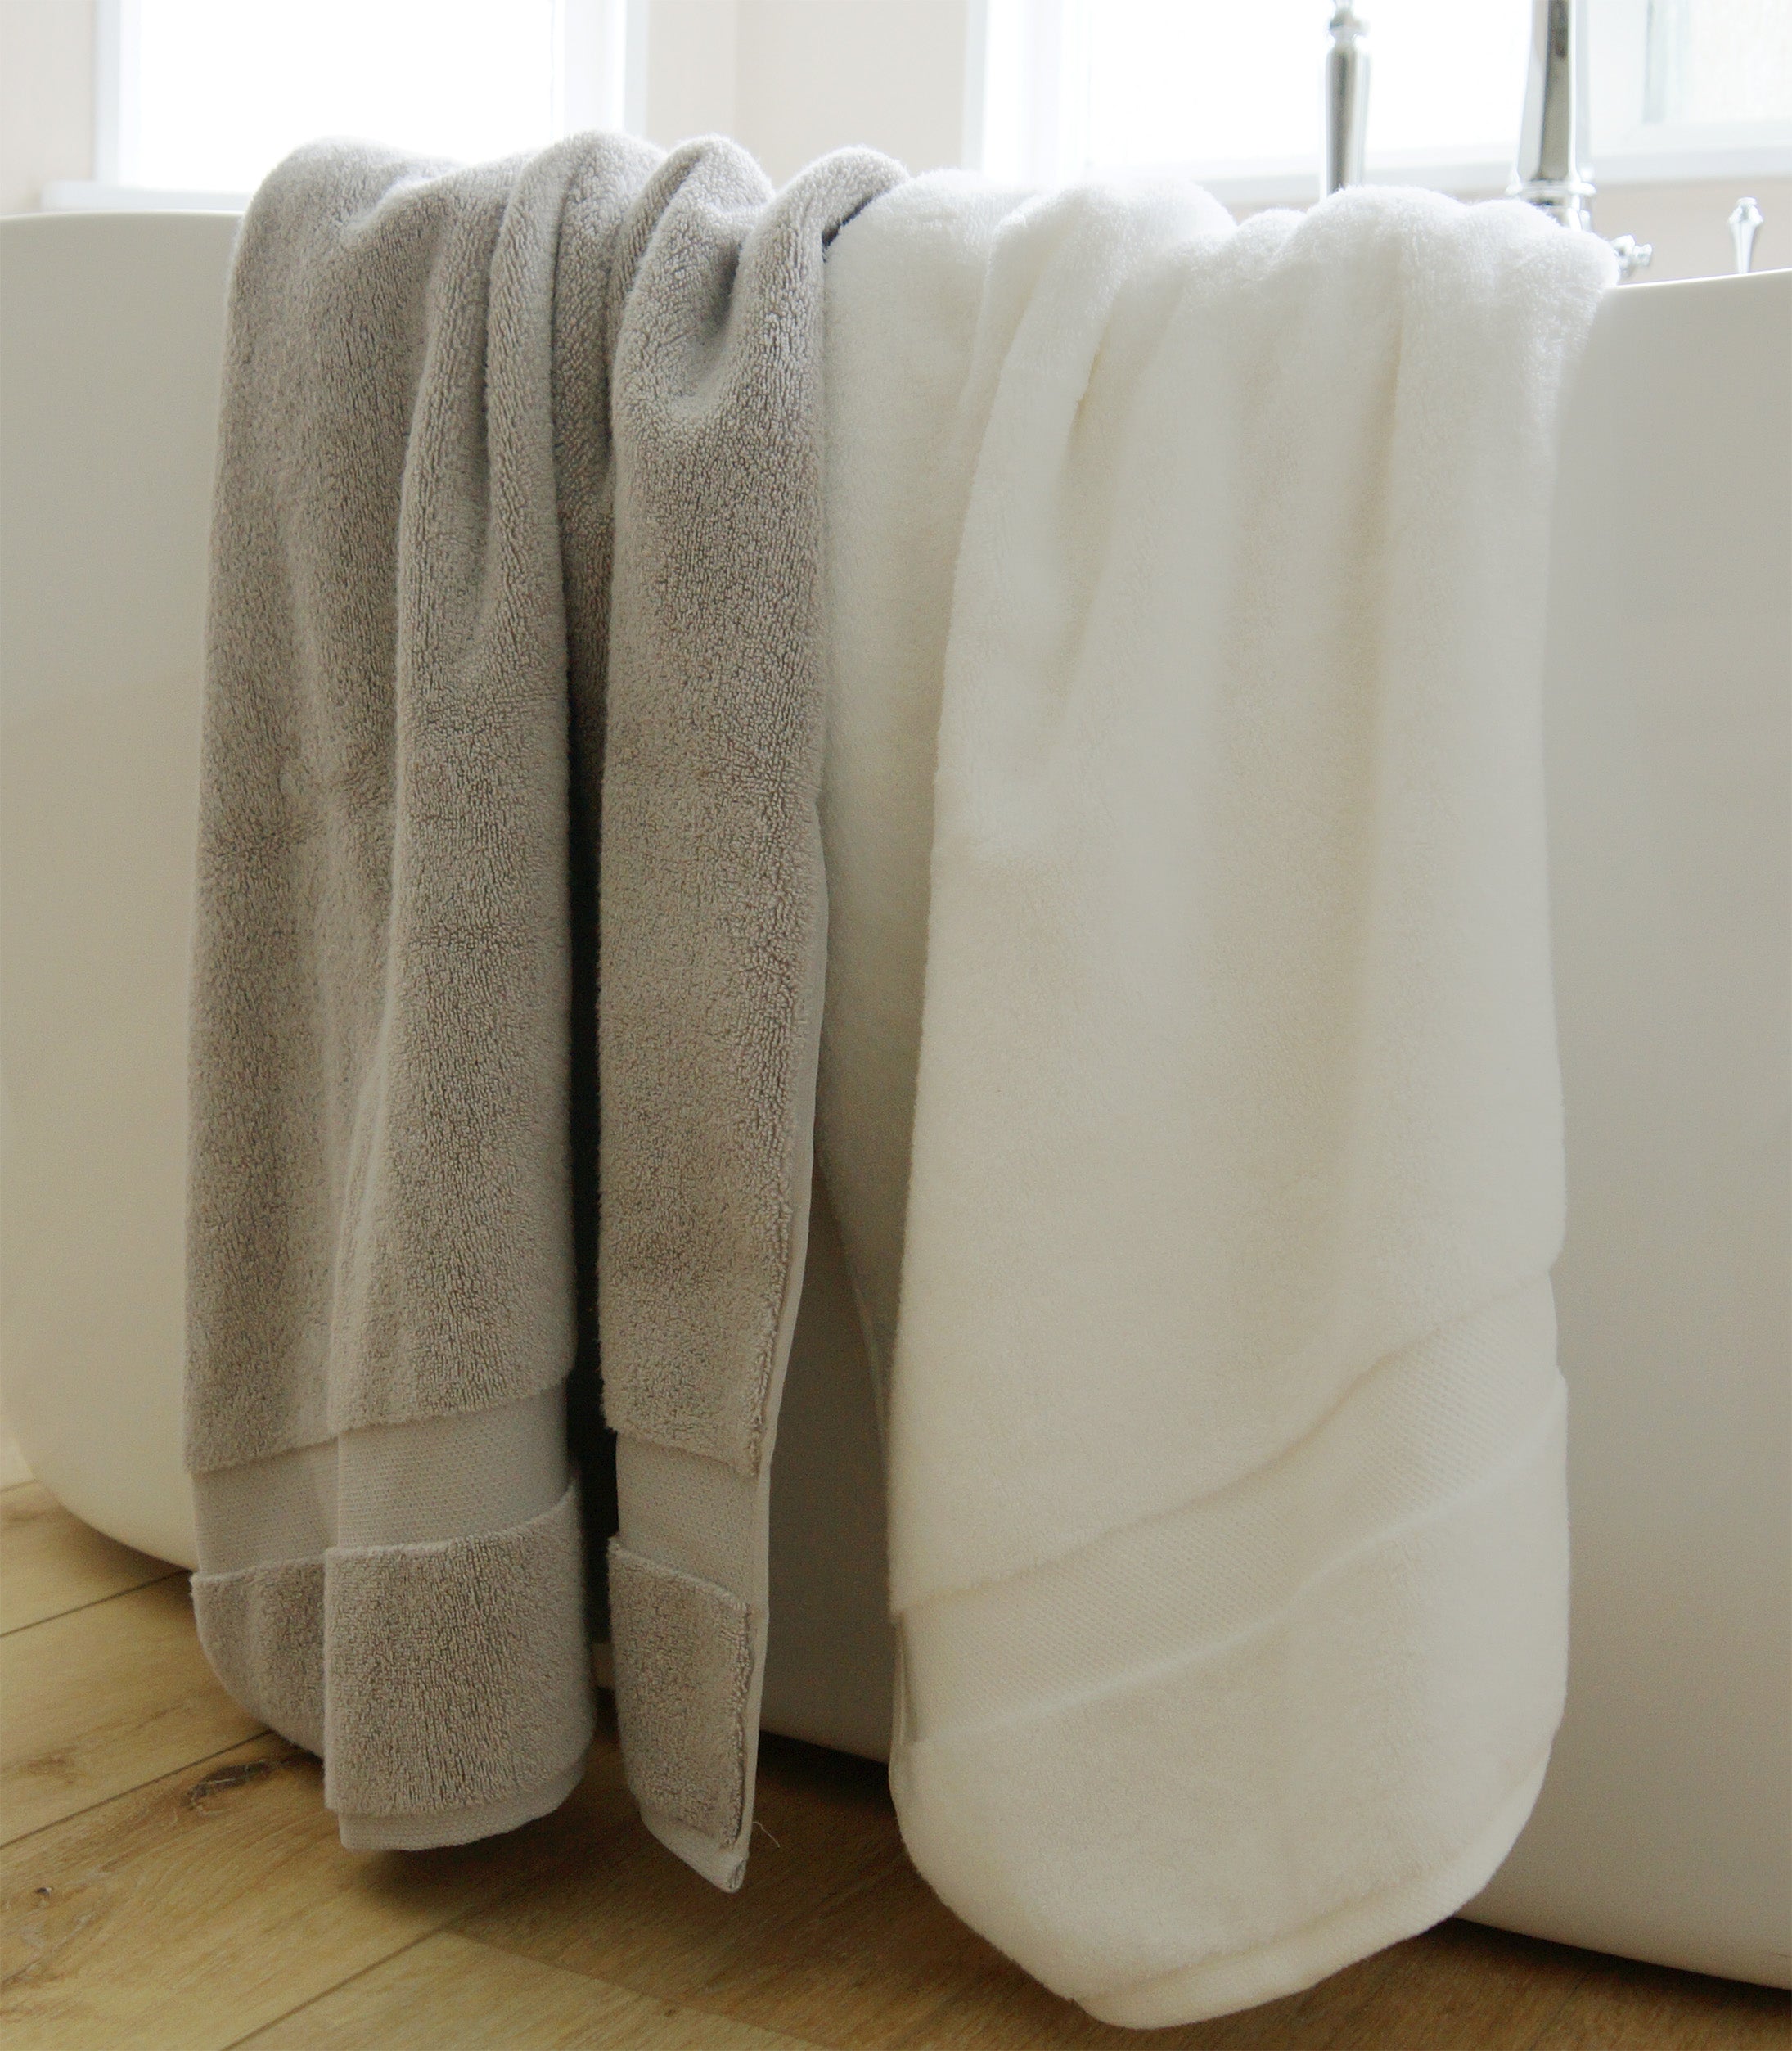 Plush Zero Twist Bath Towels in Oatmeal and White